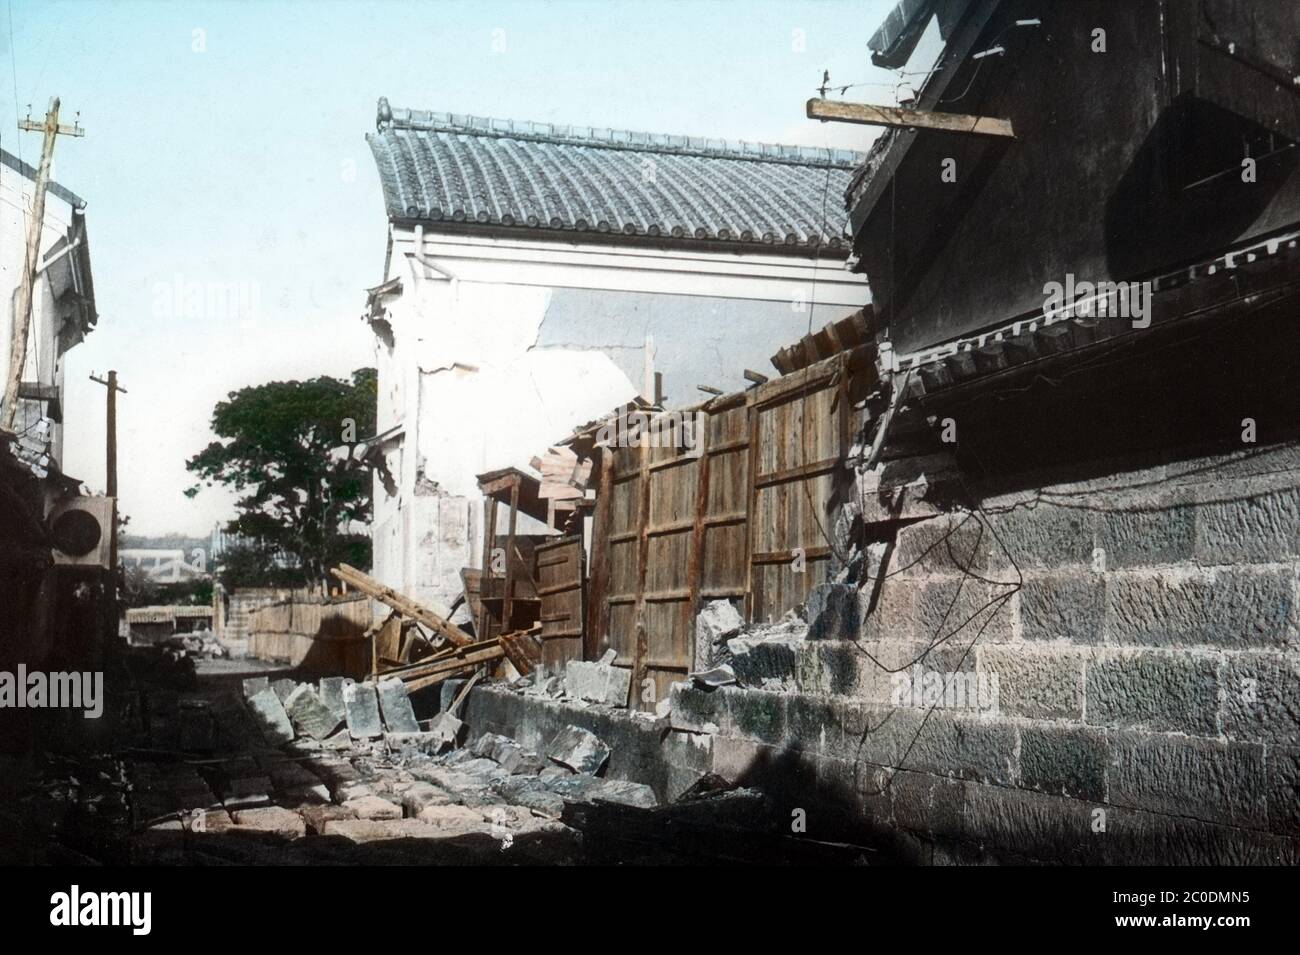 [ 1900s Japan - Earthquake Damage ] — Earthquake damage to a private Japanese home.  20th century vintage glass slide. Stock Photo